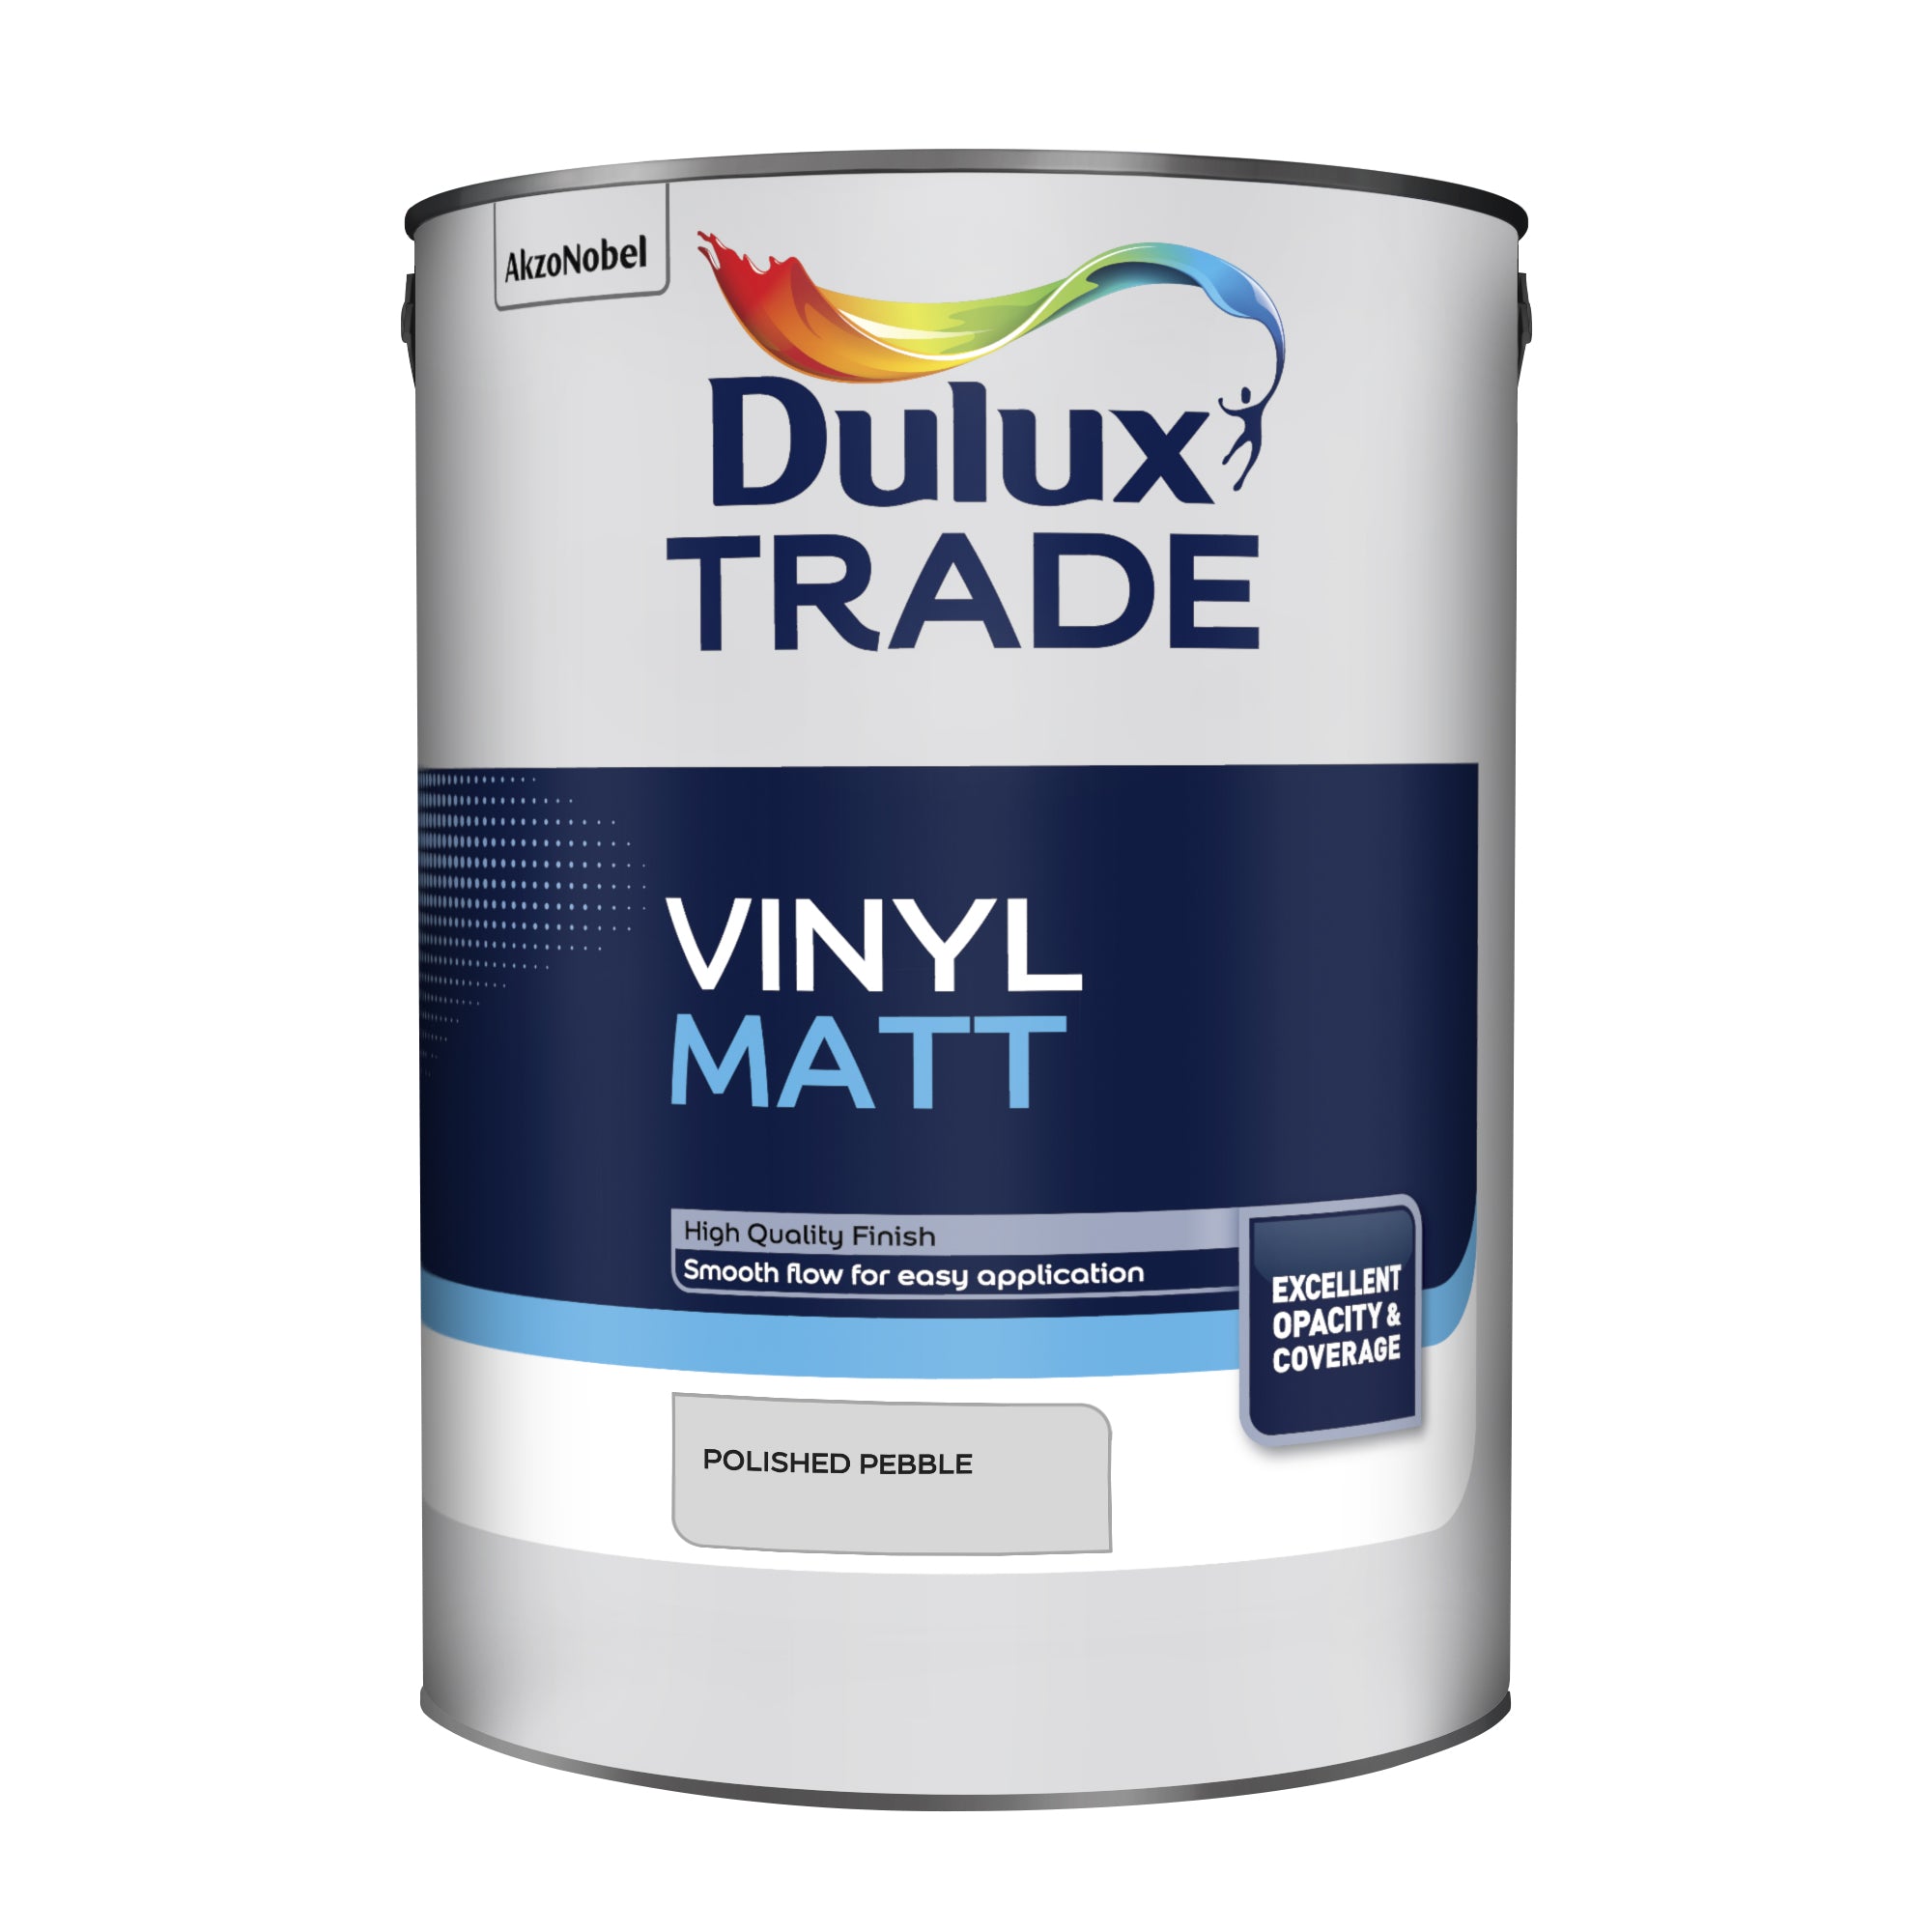 Dulux Trade Vinyl Matt Polished Pebble 5L